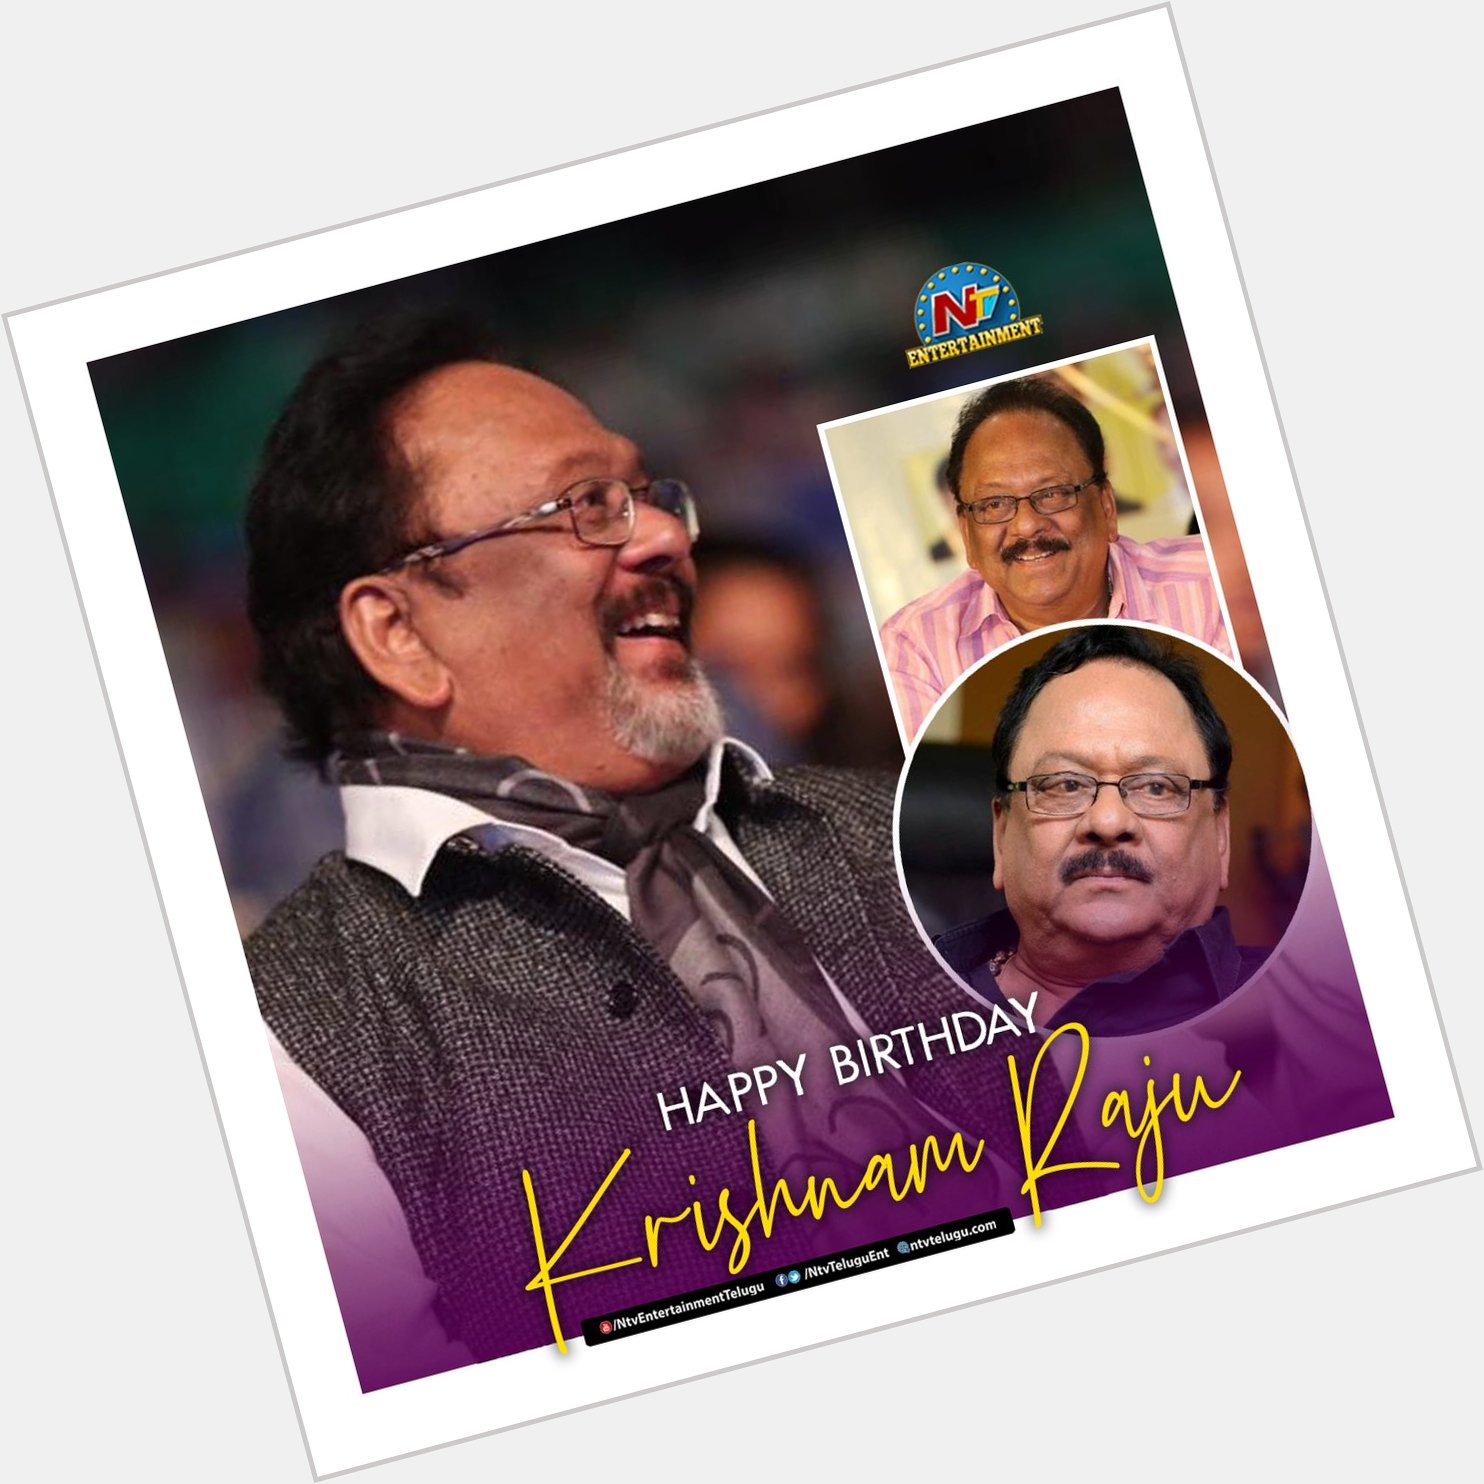 Wishing Krishnam Raju a Very Happy Birthday!   